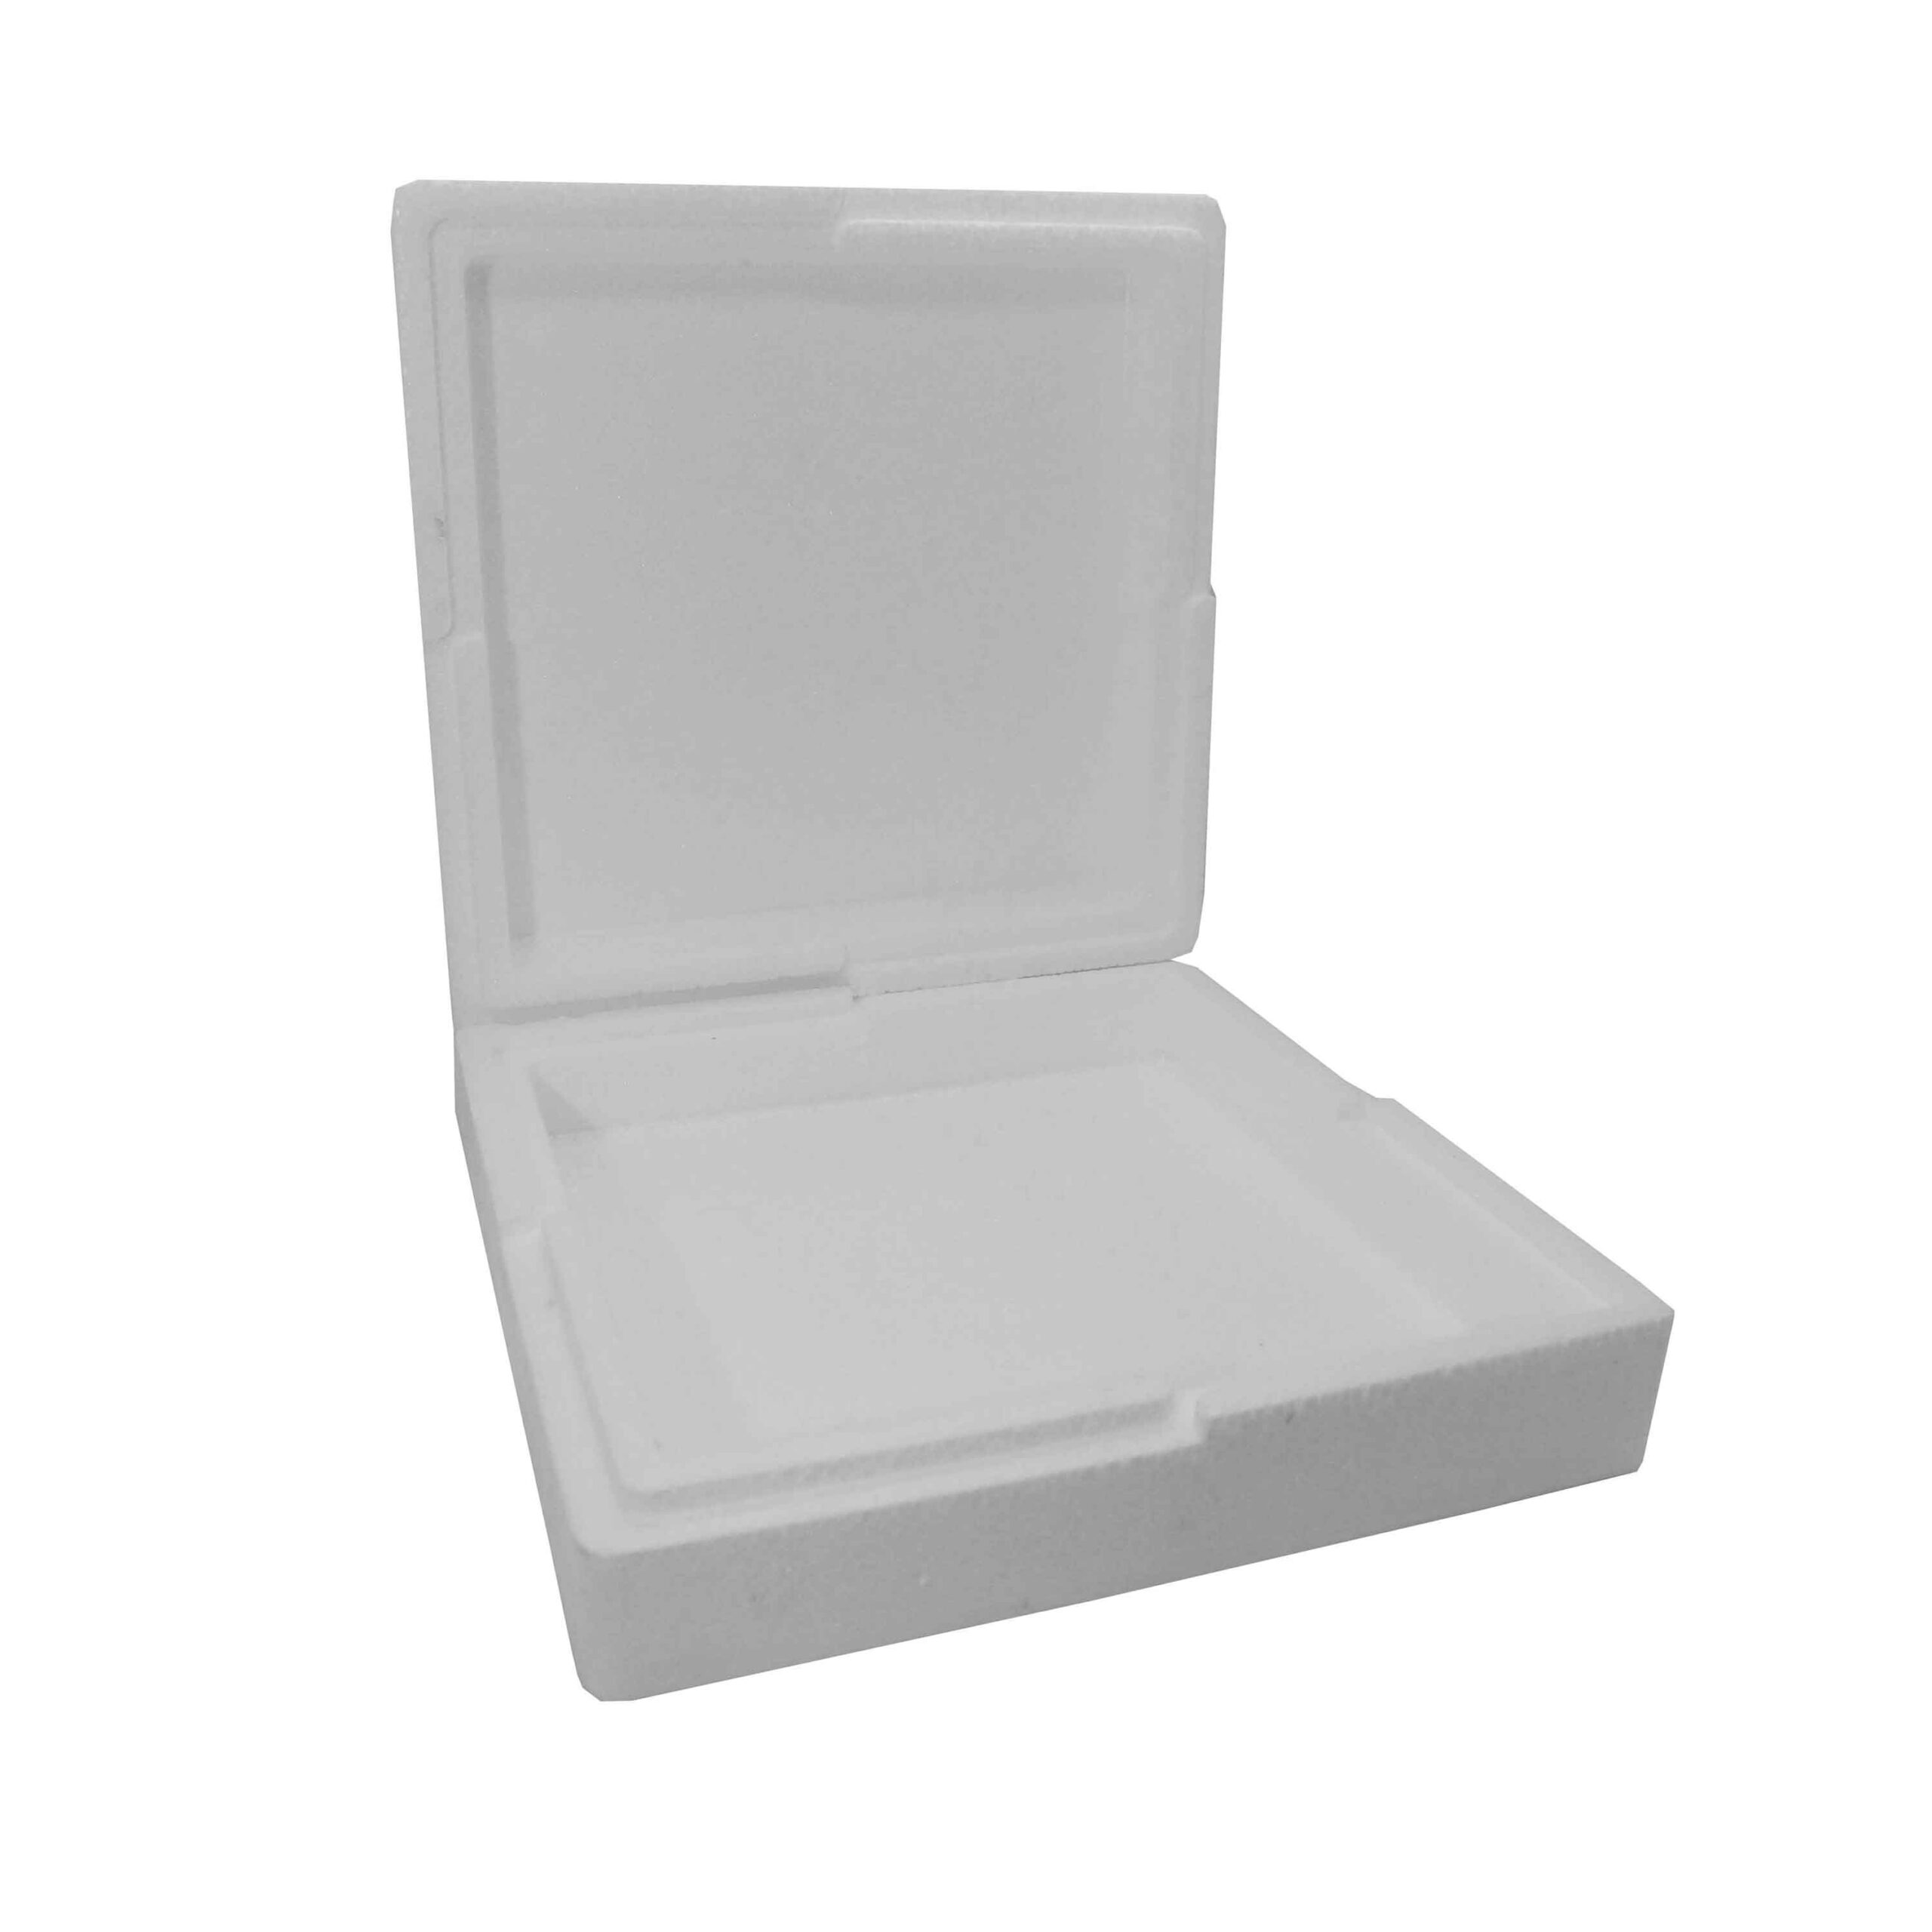 POLYSTYRENE ICE
CREAM BOX 16.5 x
16.5 x 5.5cm